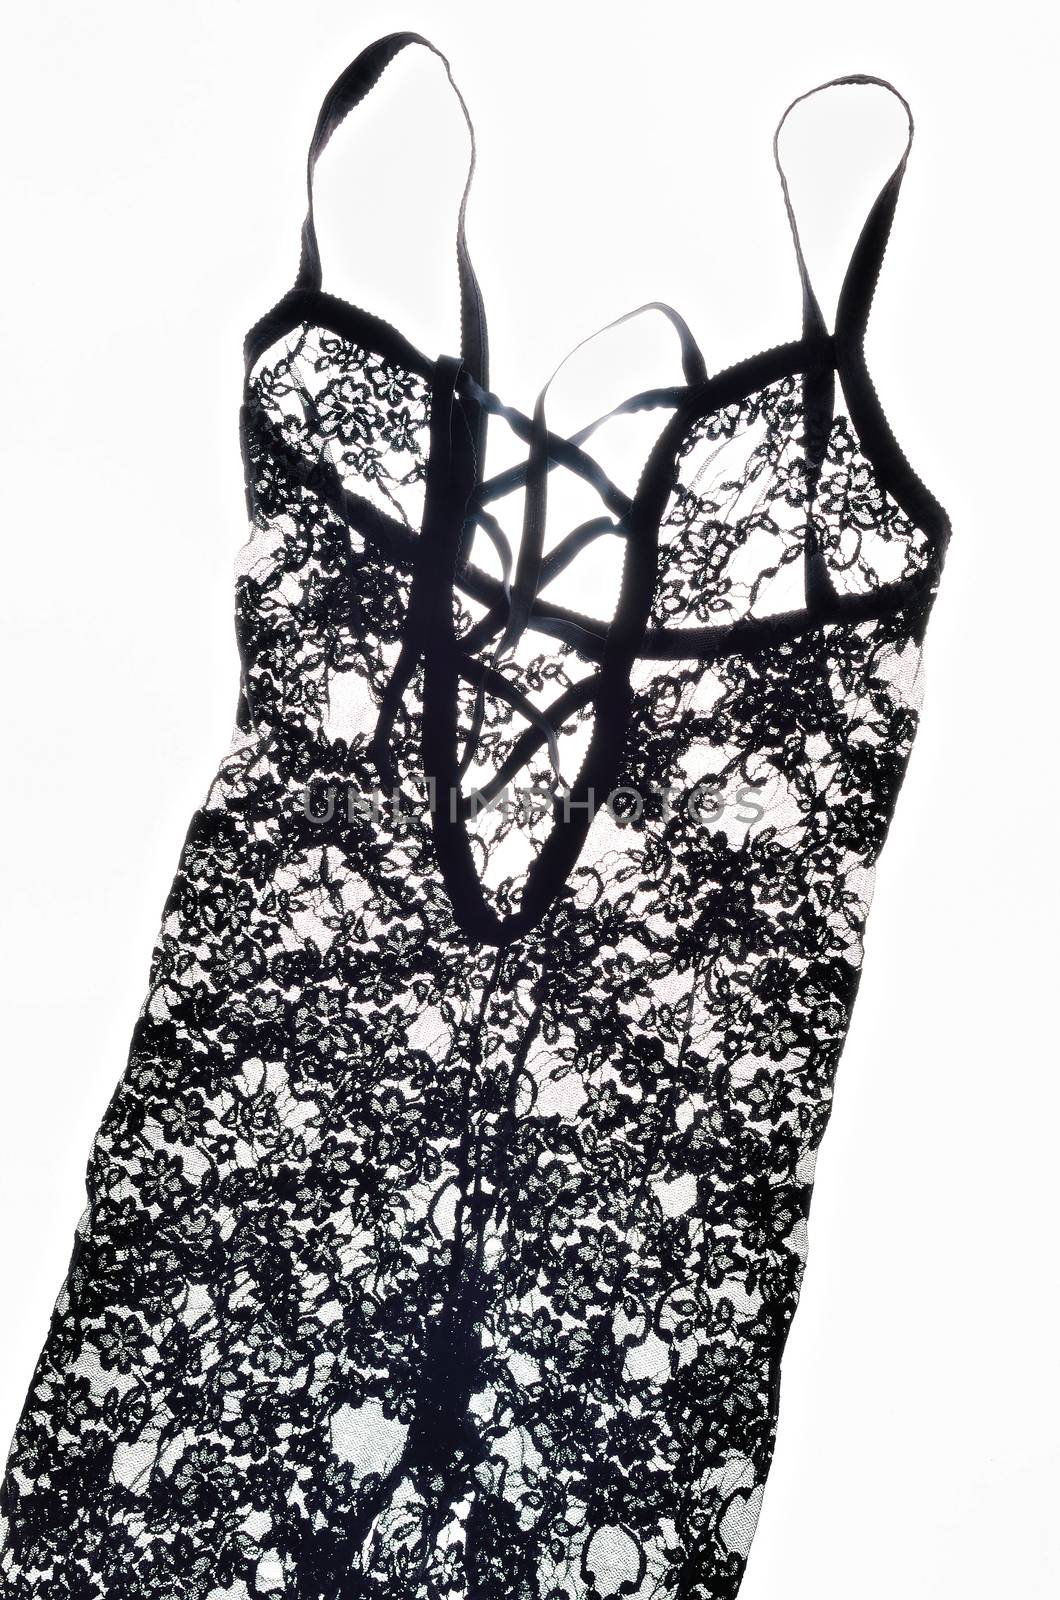 Black openwork lingerie isolated on white background